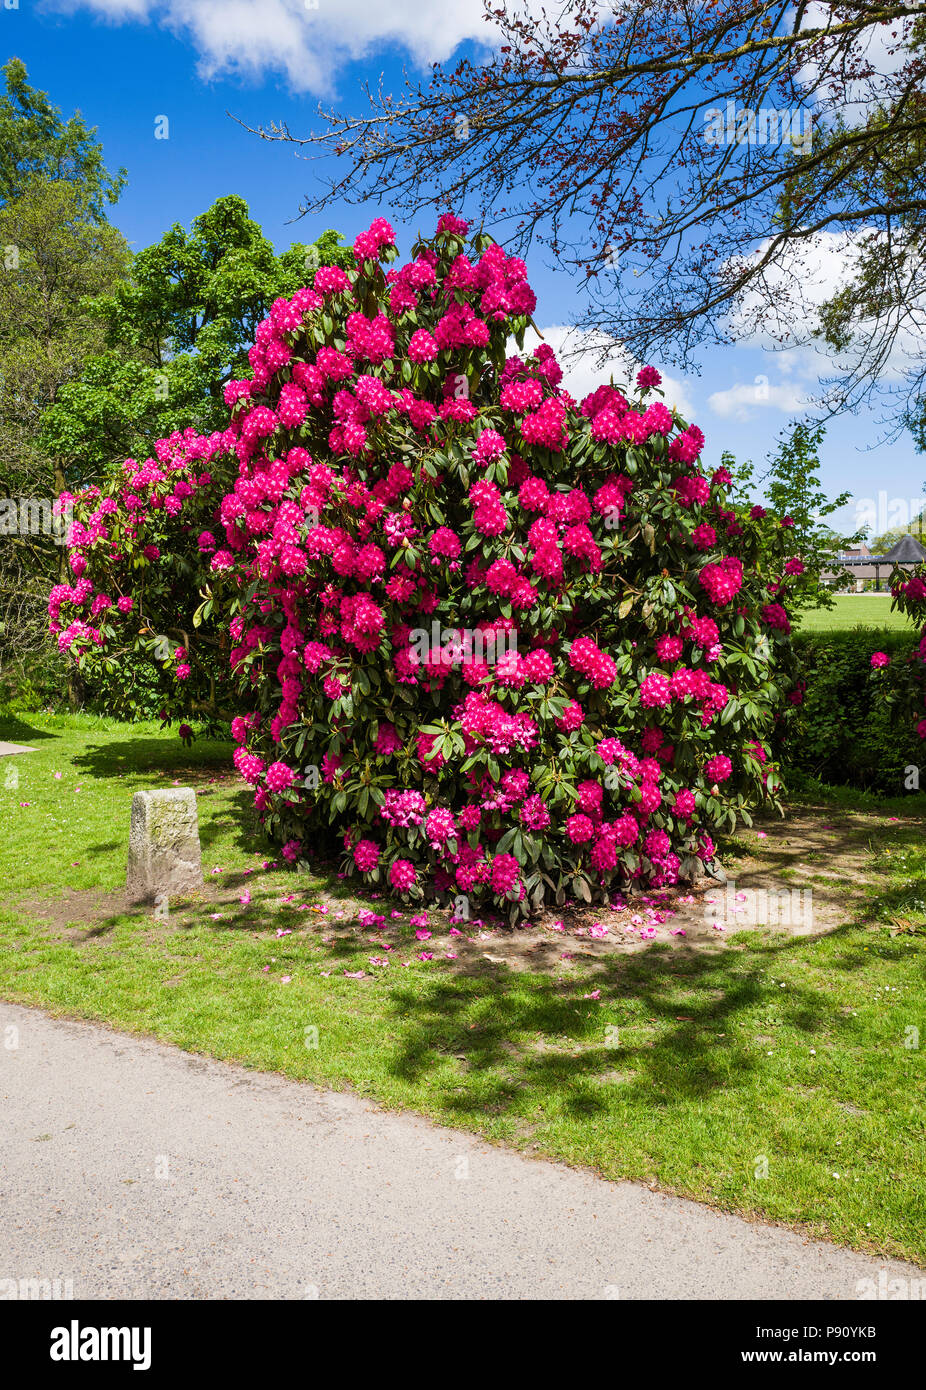 Brilliant flowering Rhododendron bush in Simmons Park, Okehampton, Devon UK. Stock Photo